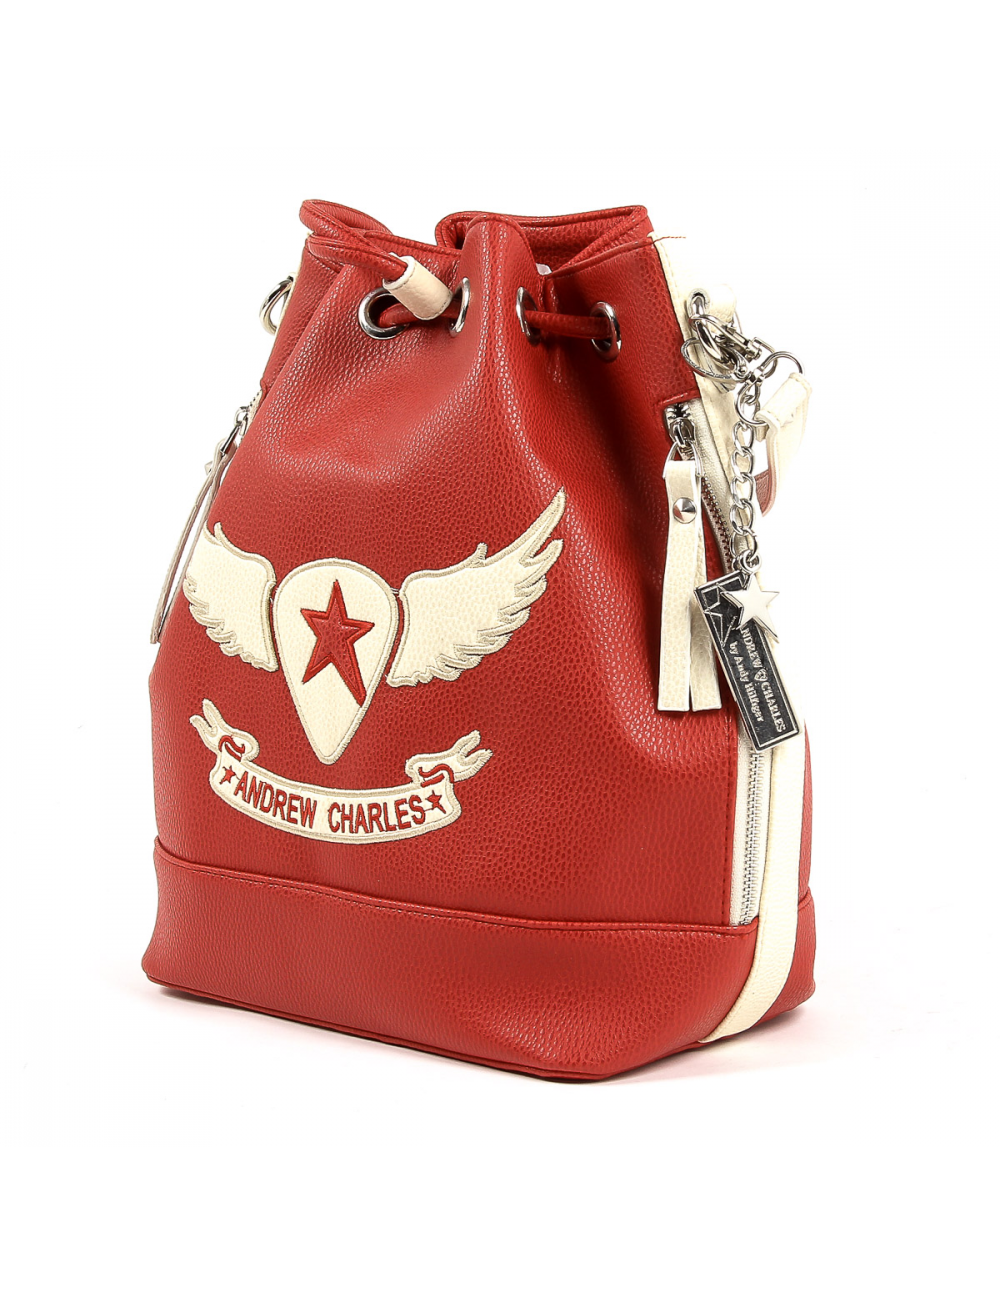 Andrew Charles Womens Handbag Red LUCINDA - YuppyCollections